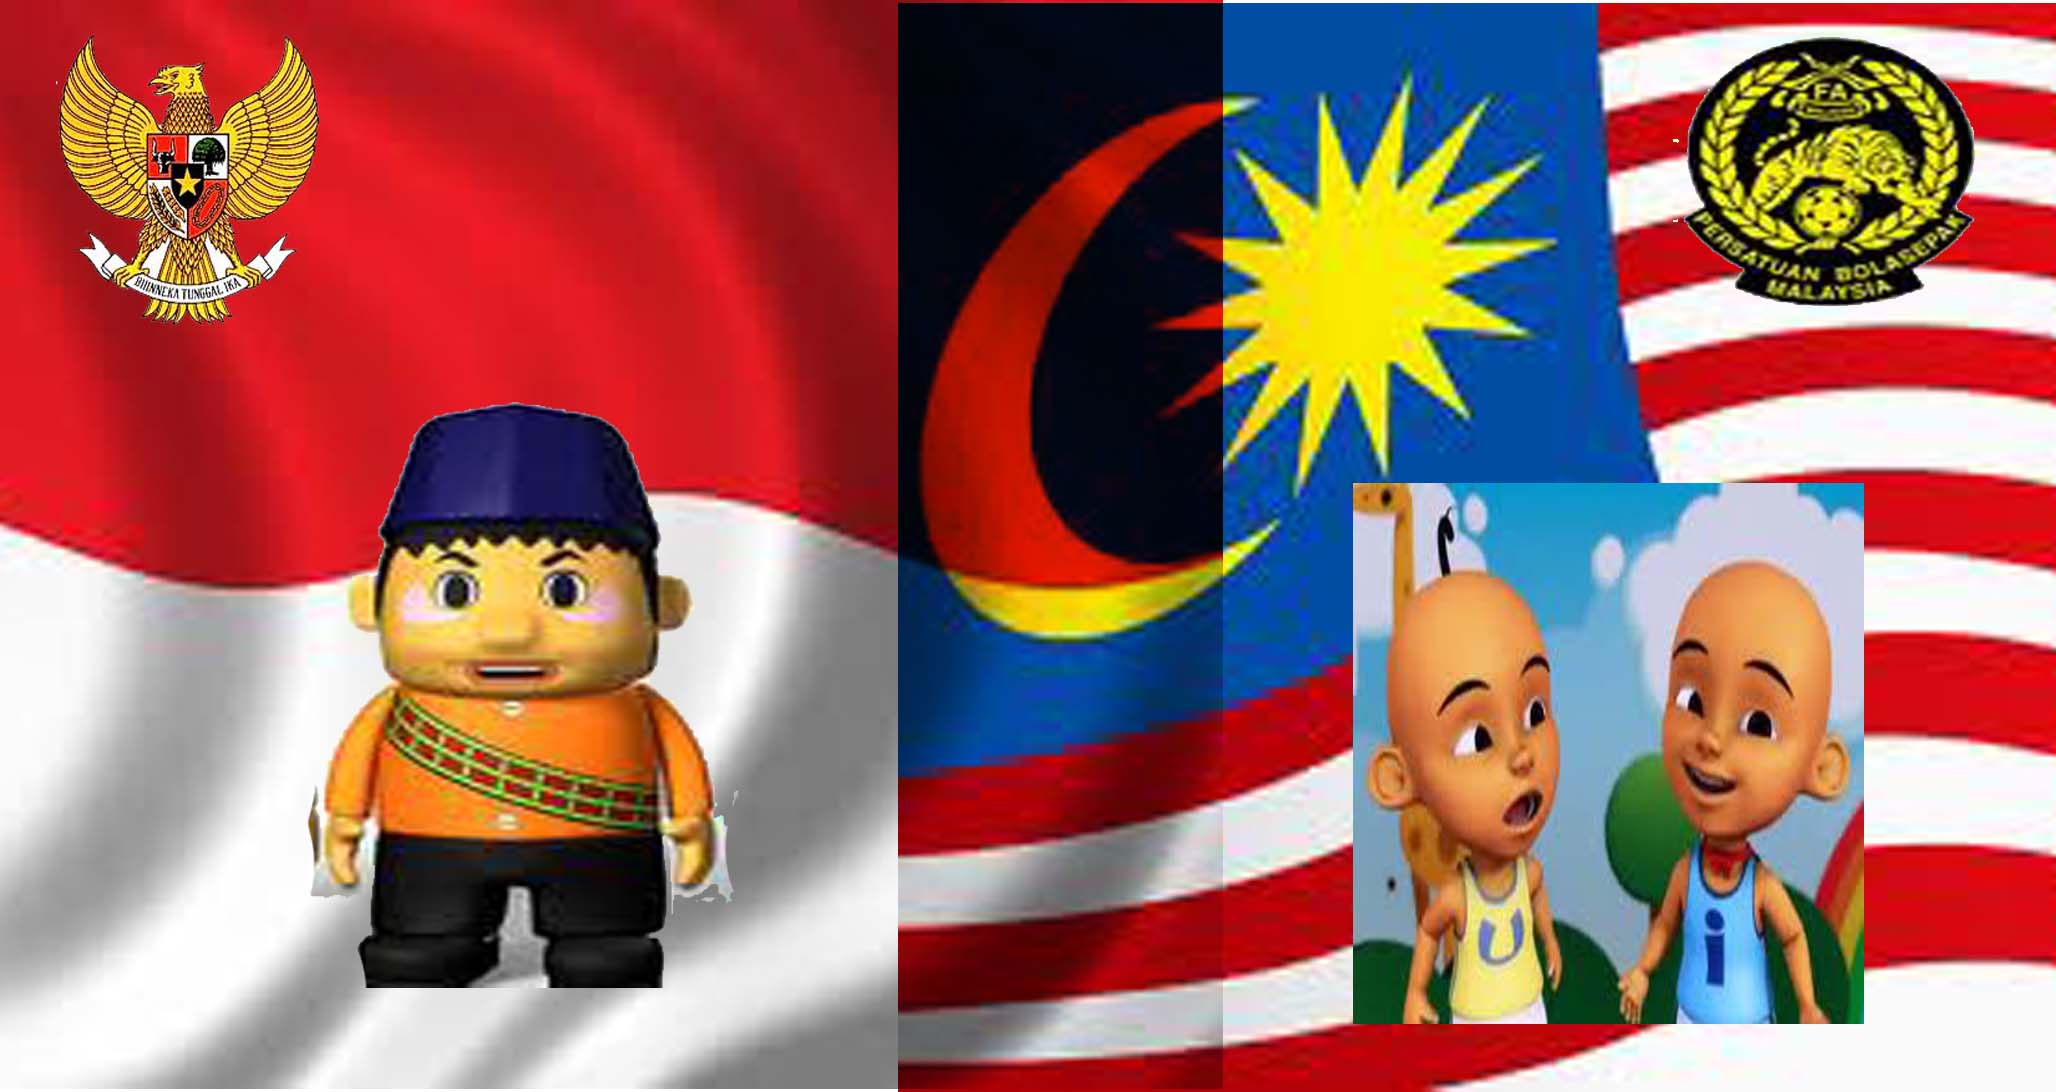 http://mabrurisirampog.files.wordpress.com/2010/12/ina-vs-malays.jpg